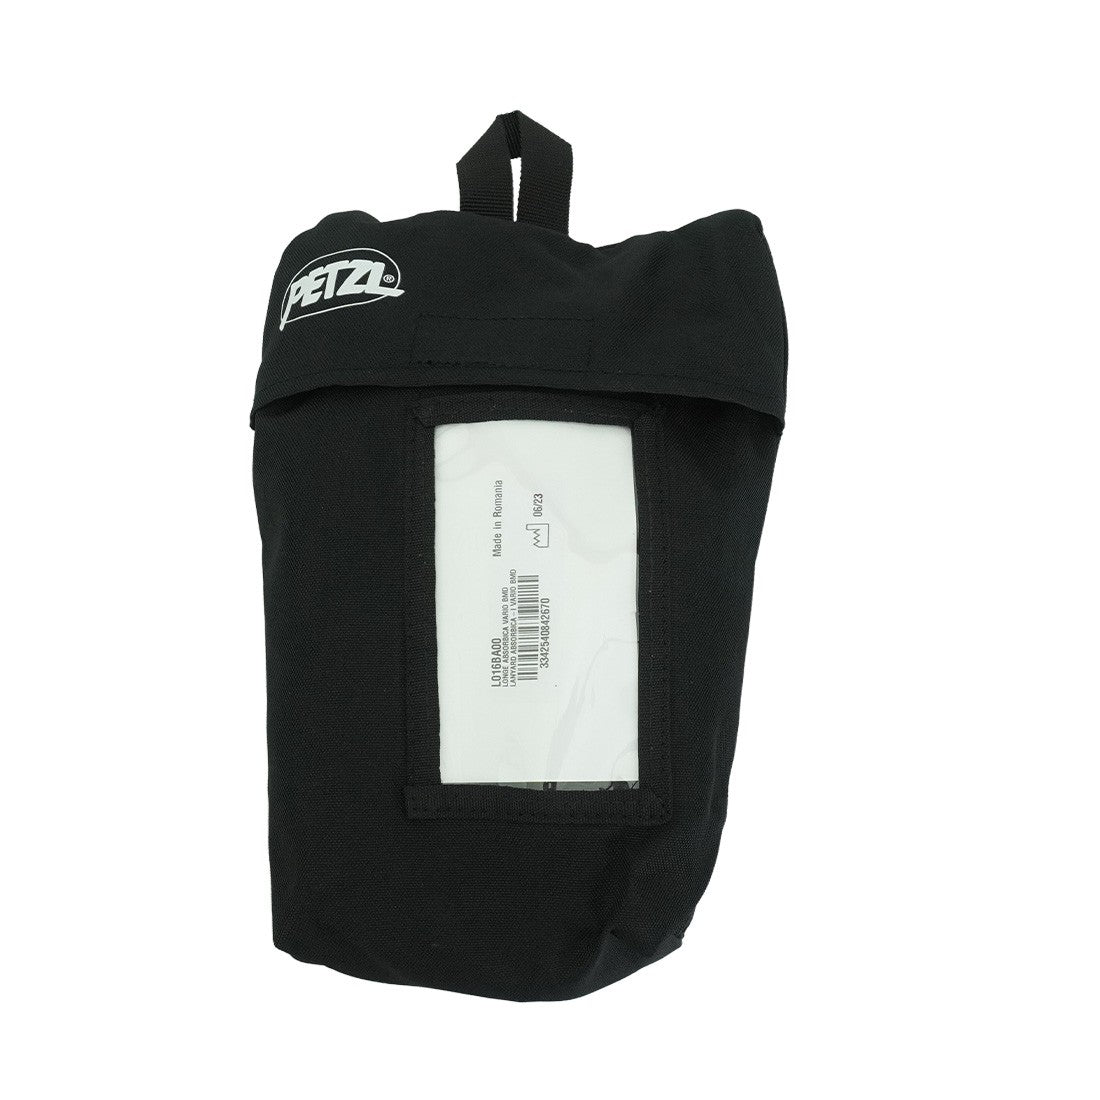 Petzl Newton EasyFit MEWP Kit Harness Bag View